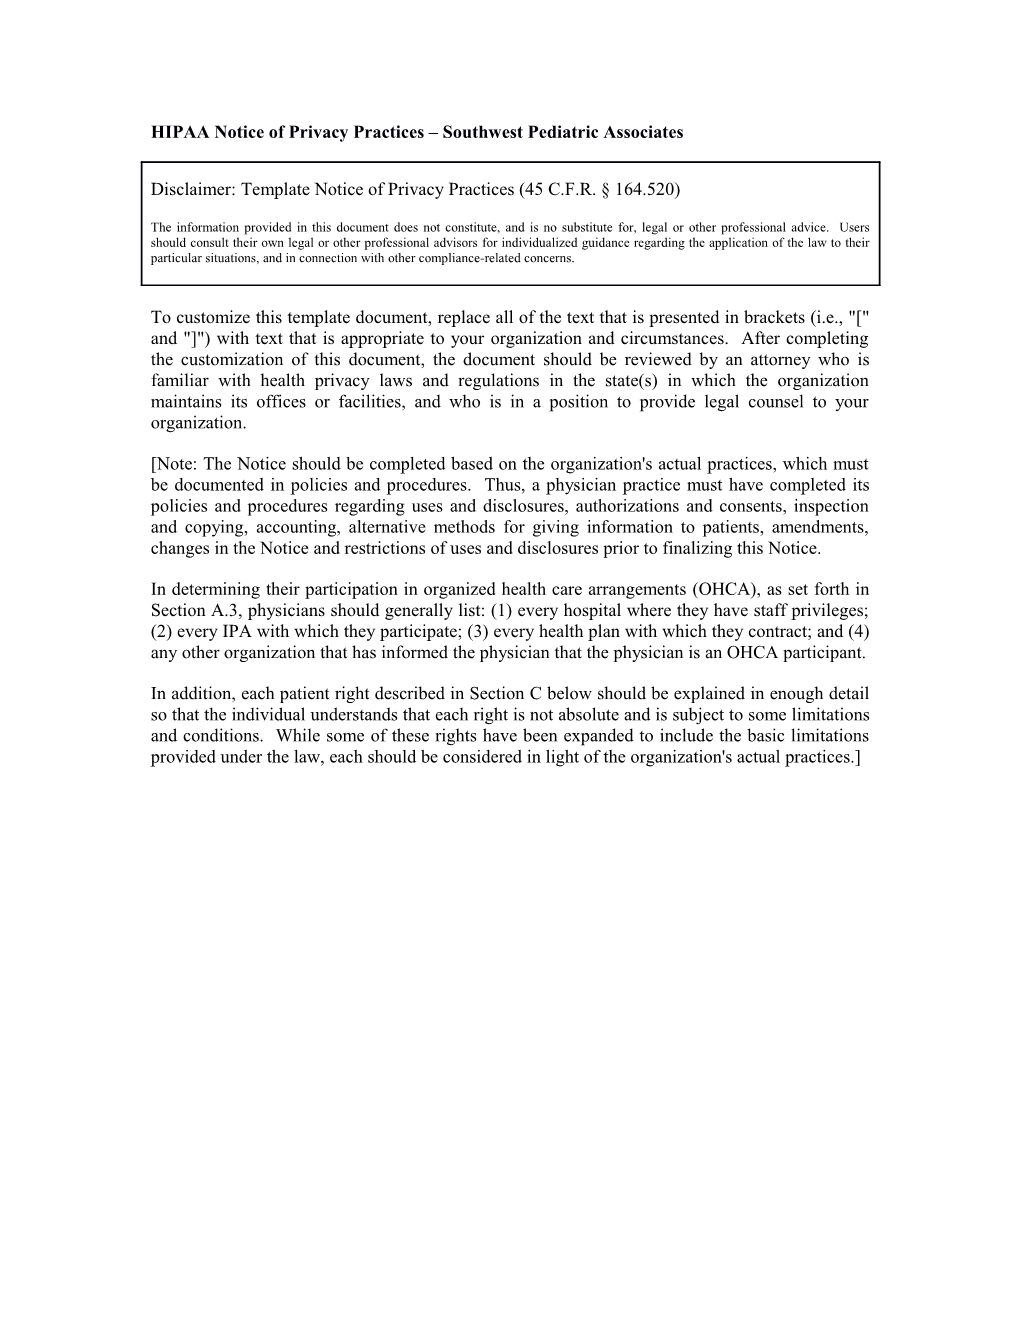 HIPAA Notice of Privacy Practices Southwest Pediatric Associates